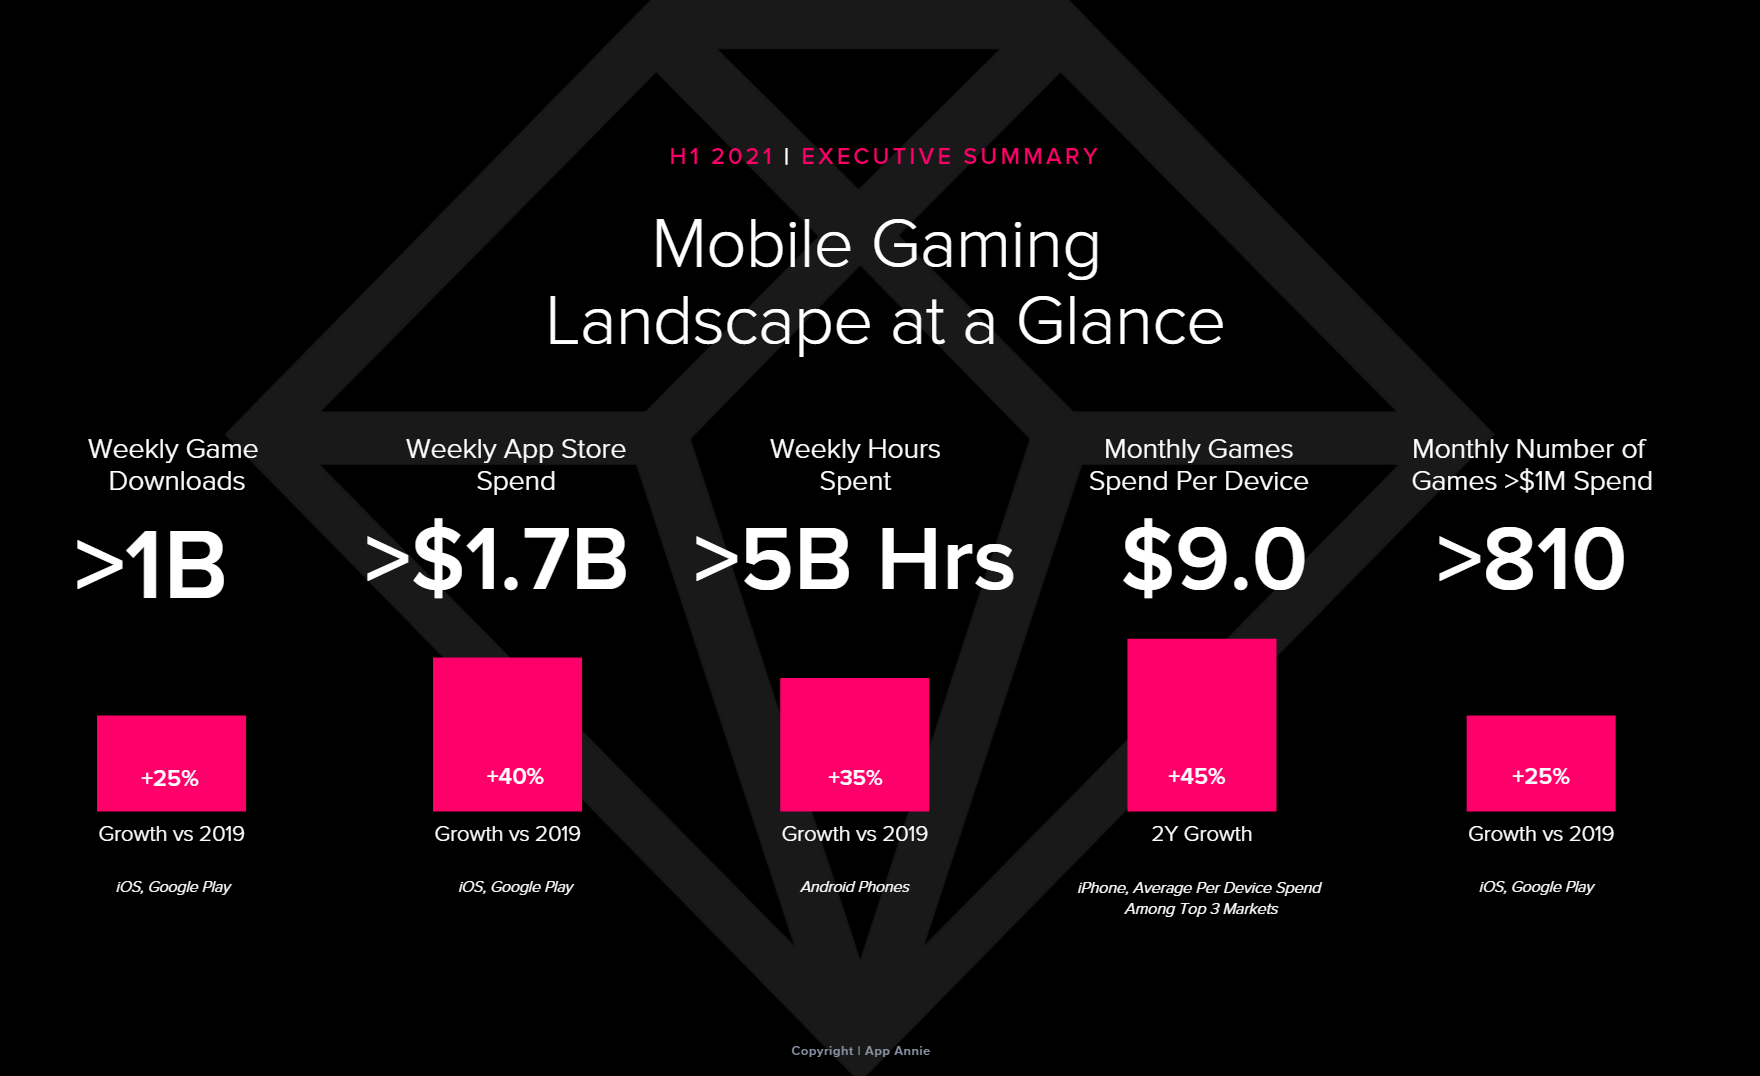 More Than Half a Dozen Mobile Games Earn Over $100 Million a Month